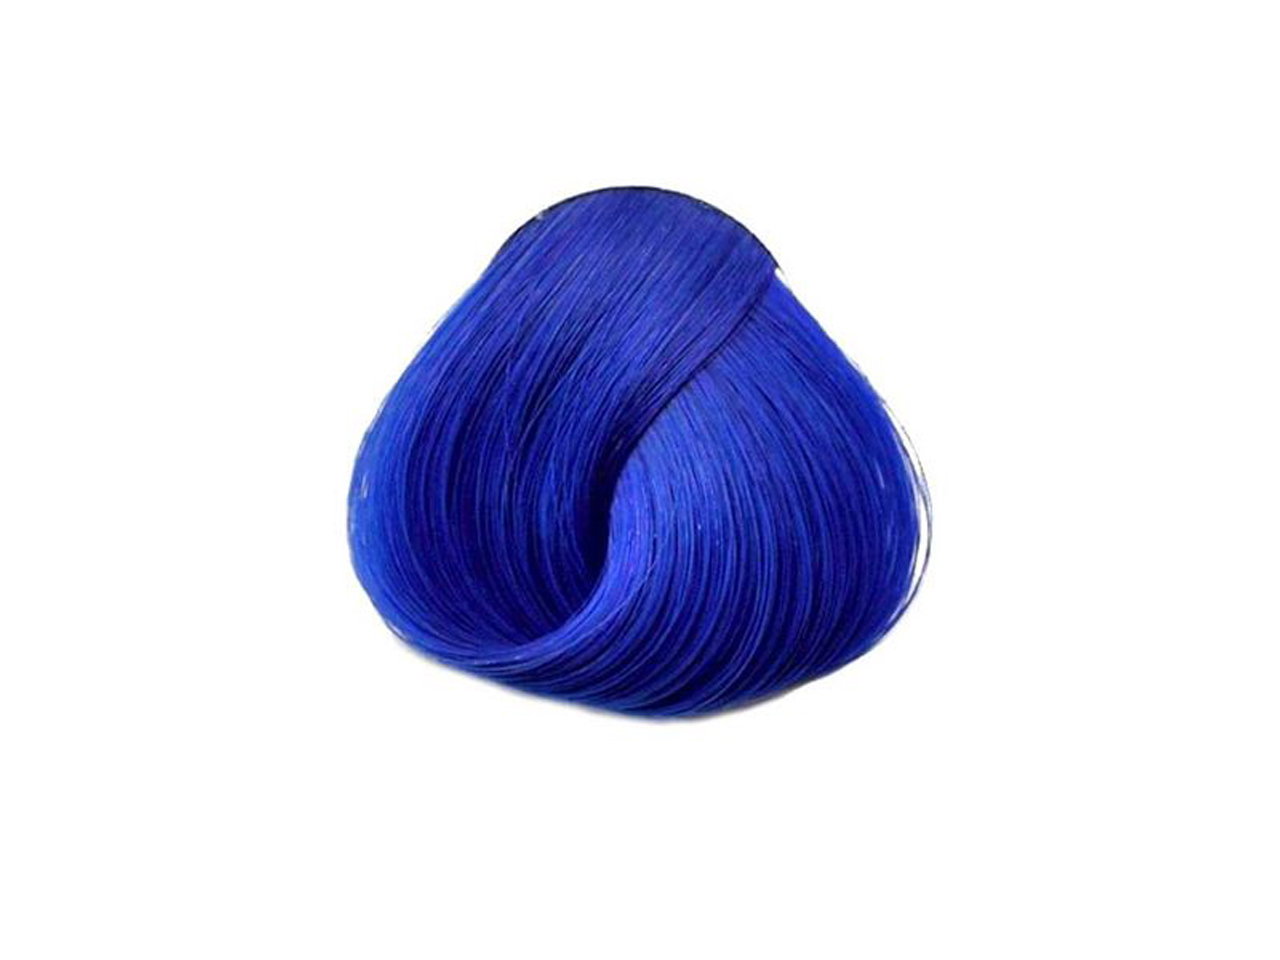 6. Splat Rebellious Colors Semi-Permanent Hair Dye - 3 Ounce - wide 2